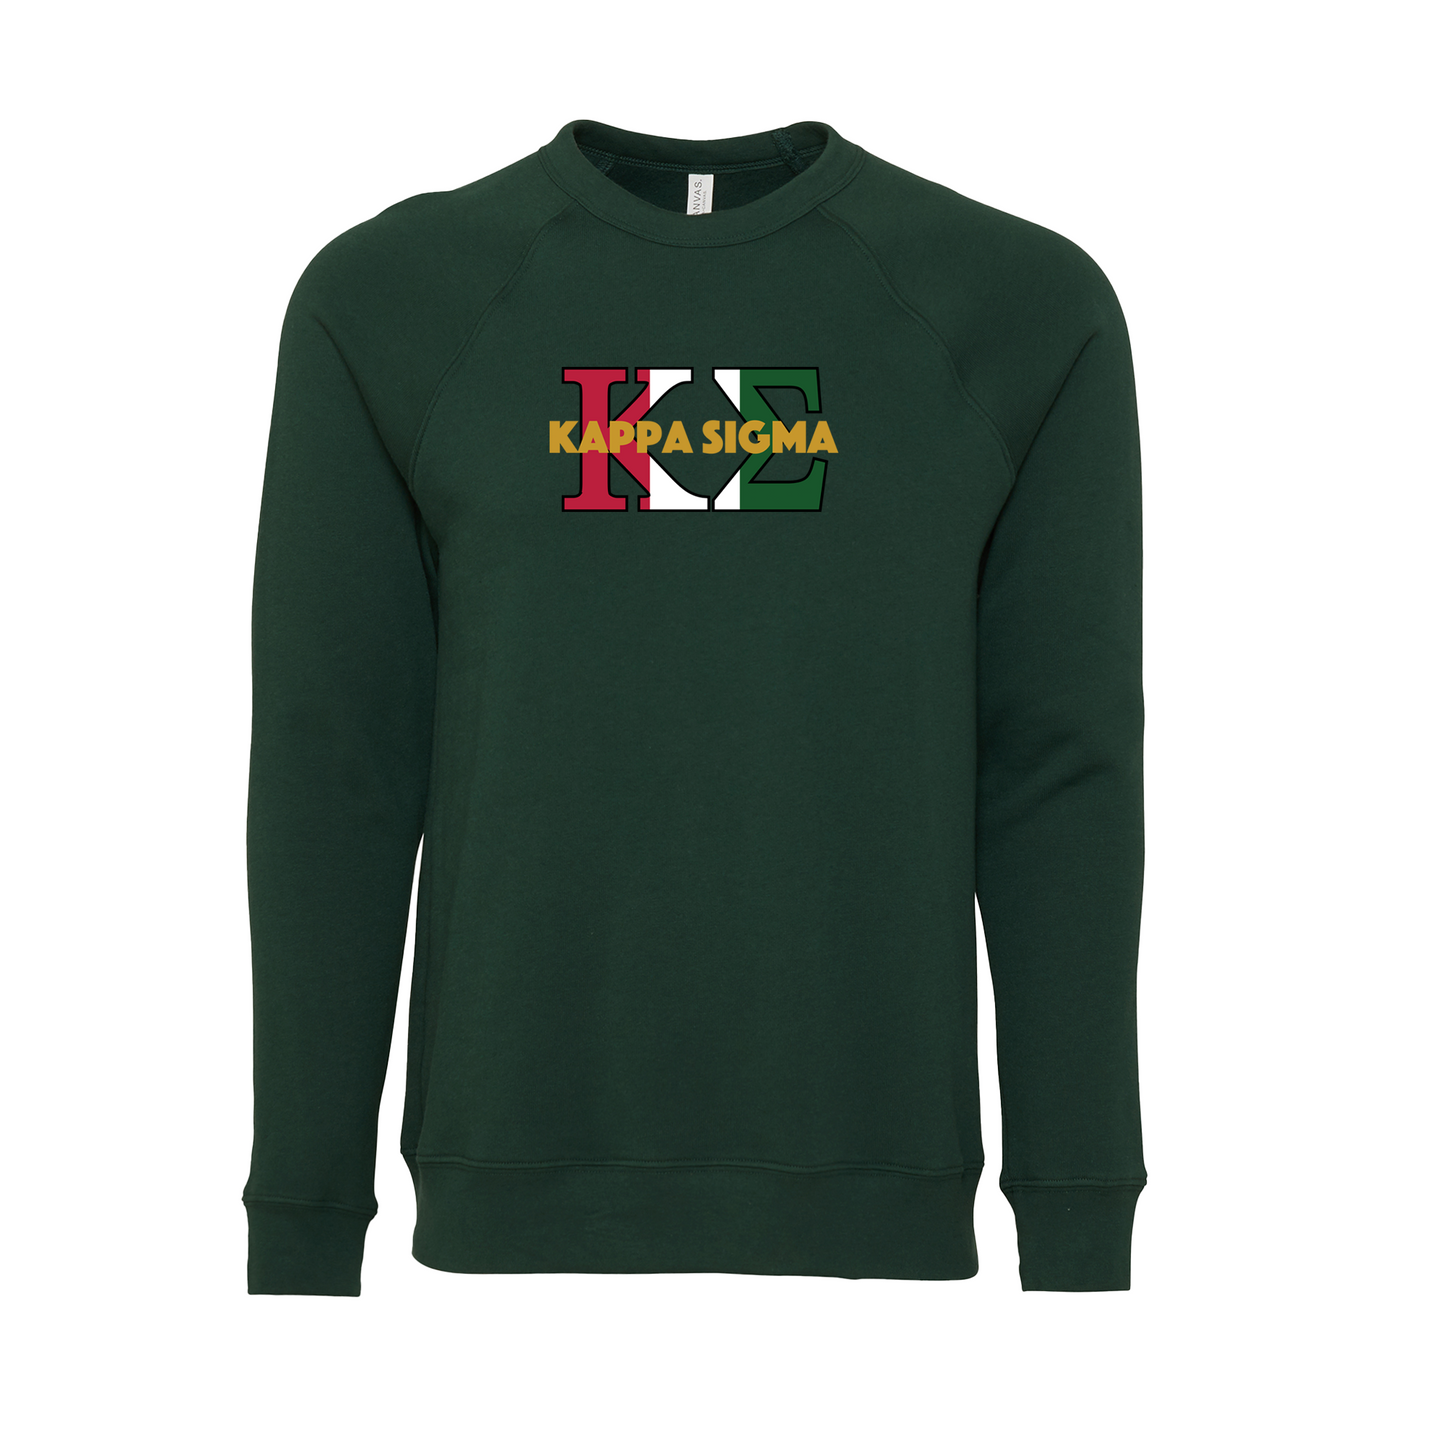 Kappa Sigma Applique Letters Crewneck Sweatshirt